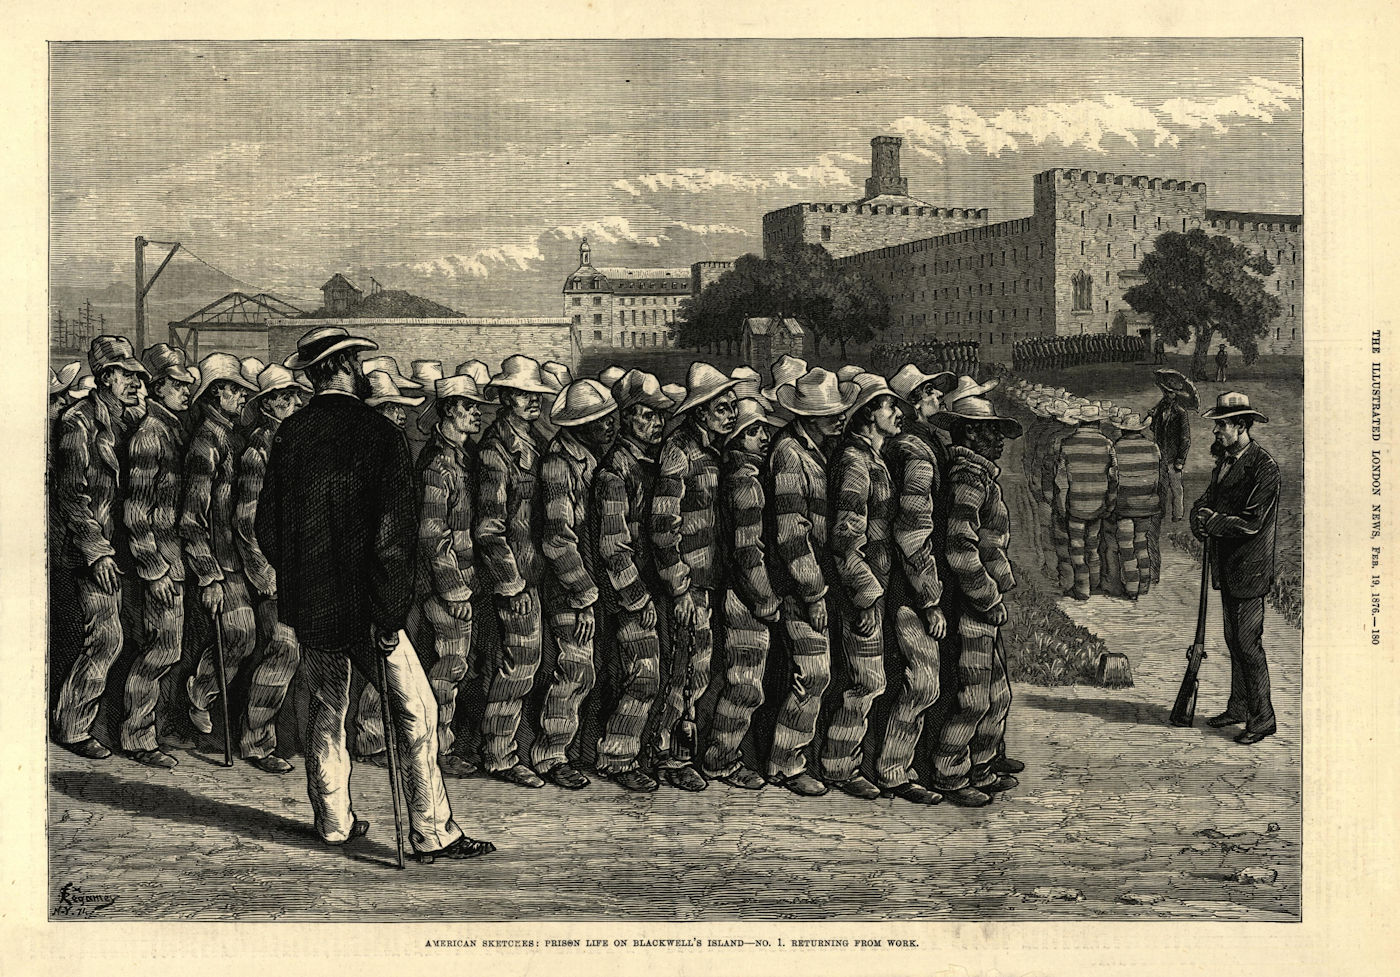 Blackwell's (now Roosevelt) Island prison, New York. Returning from work 1876